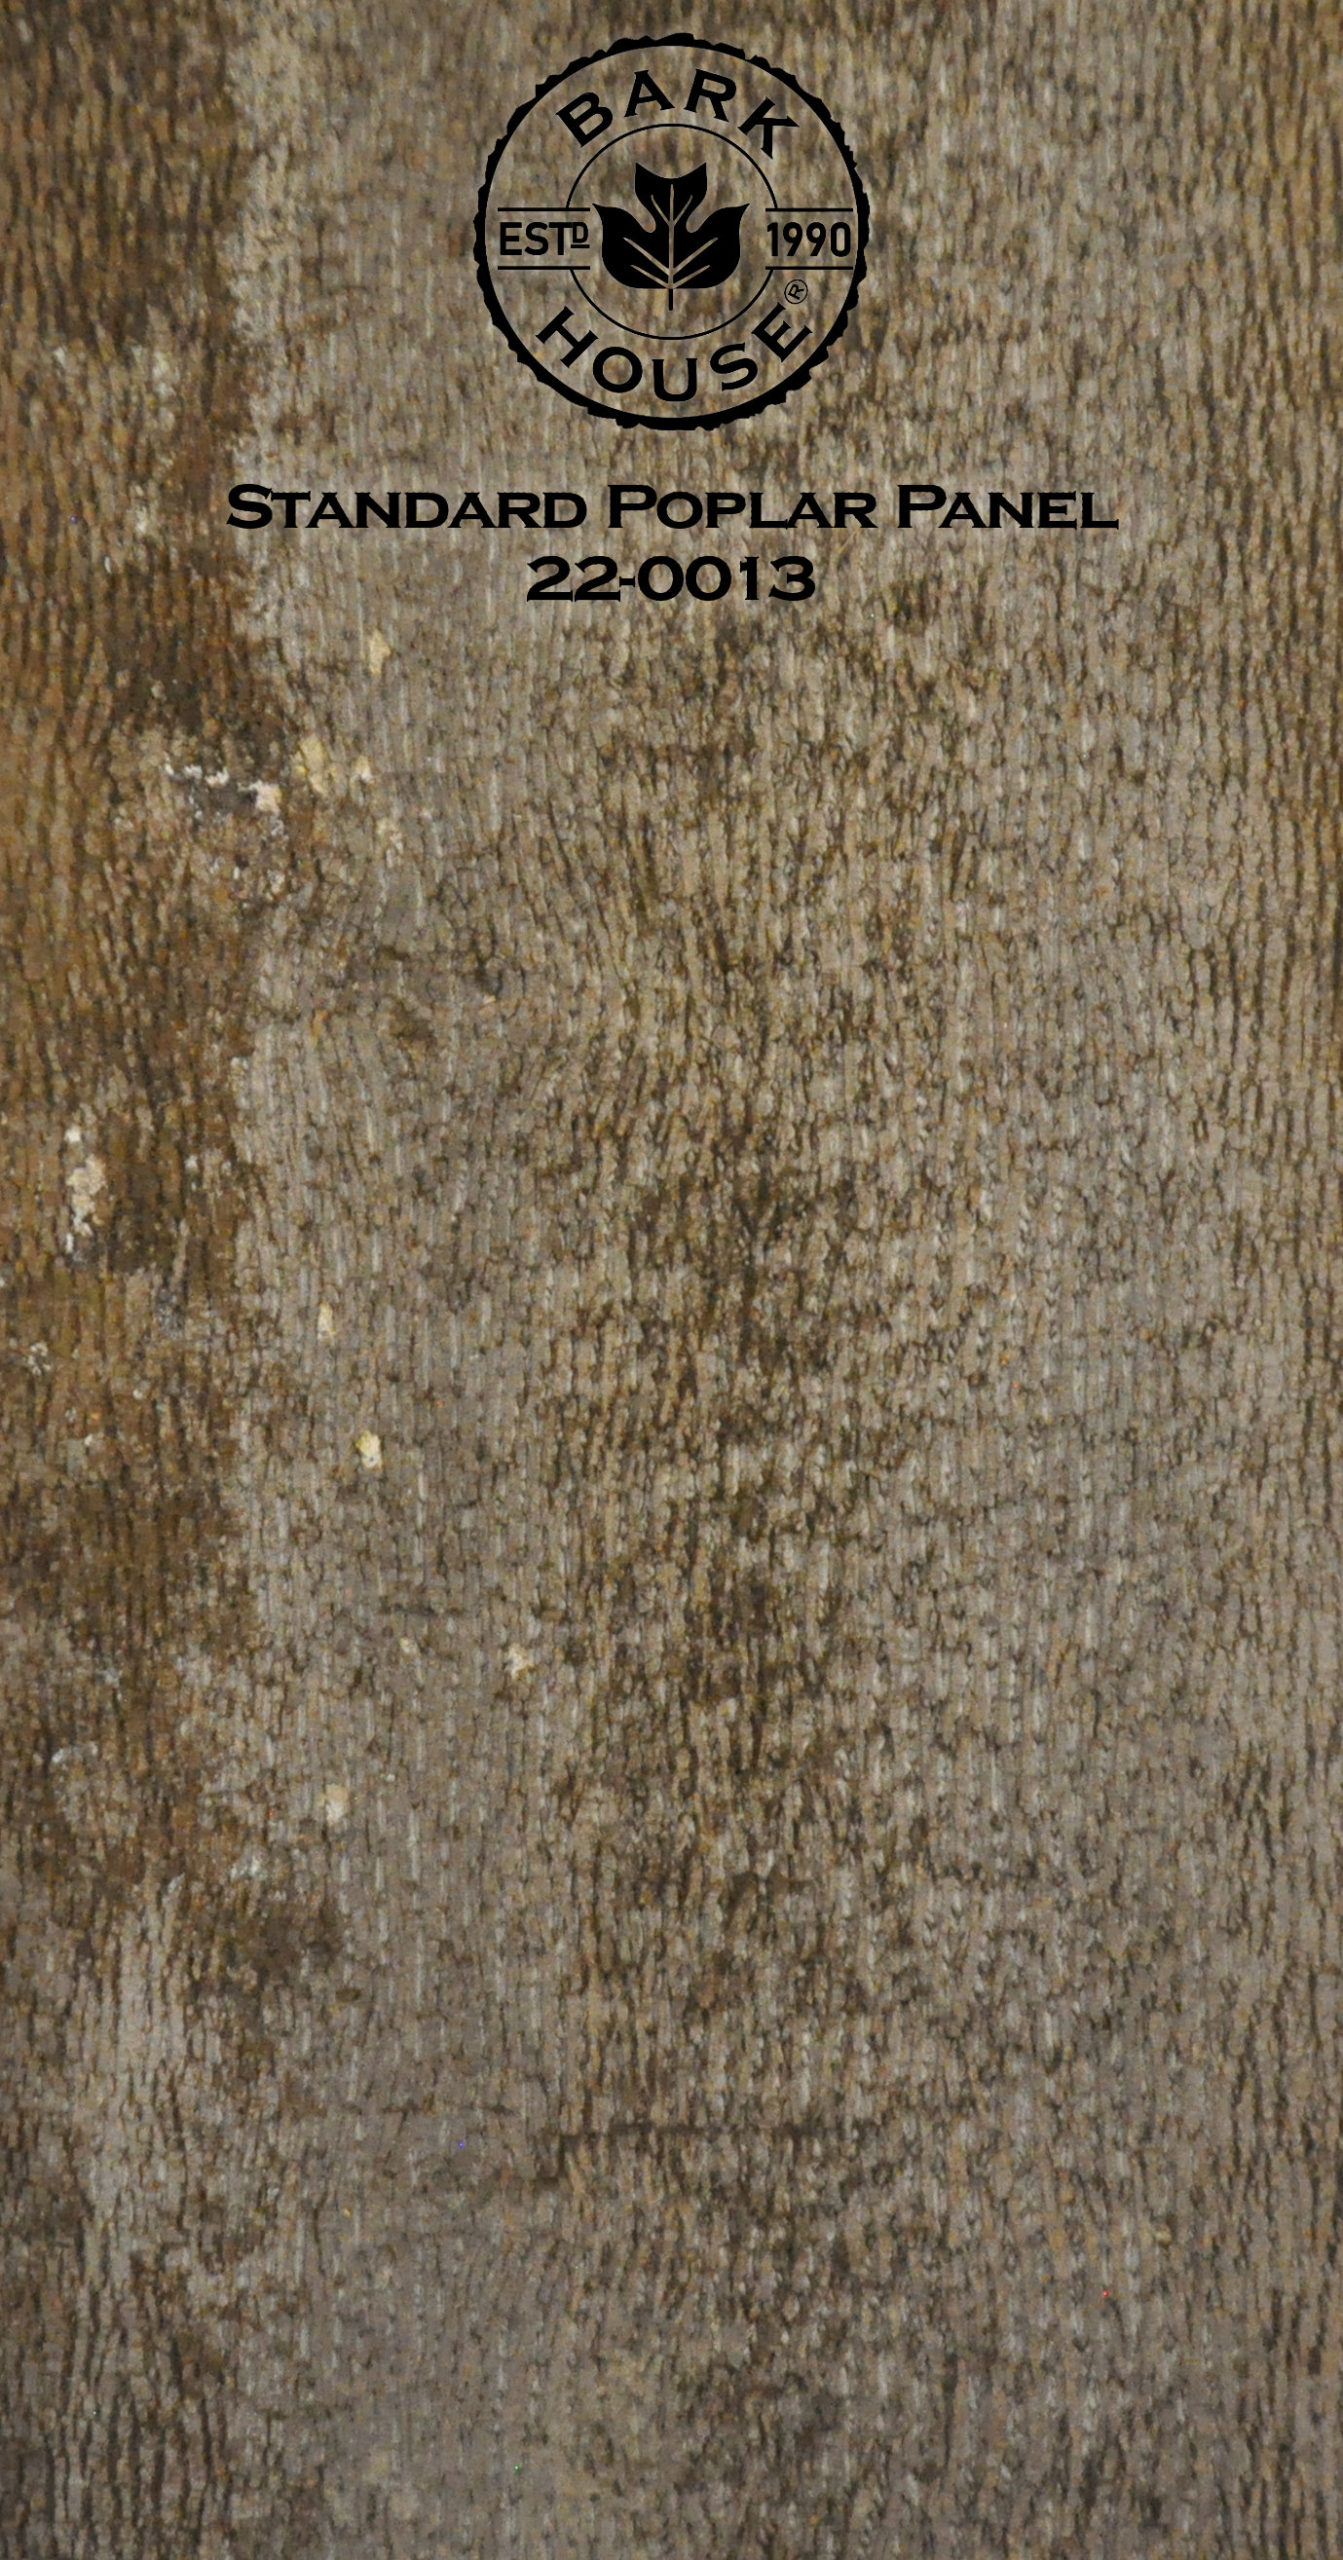 Bark House poplar bark panel SKU POPP-STD-22-0013